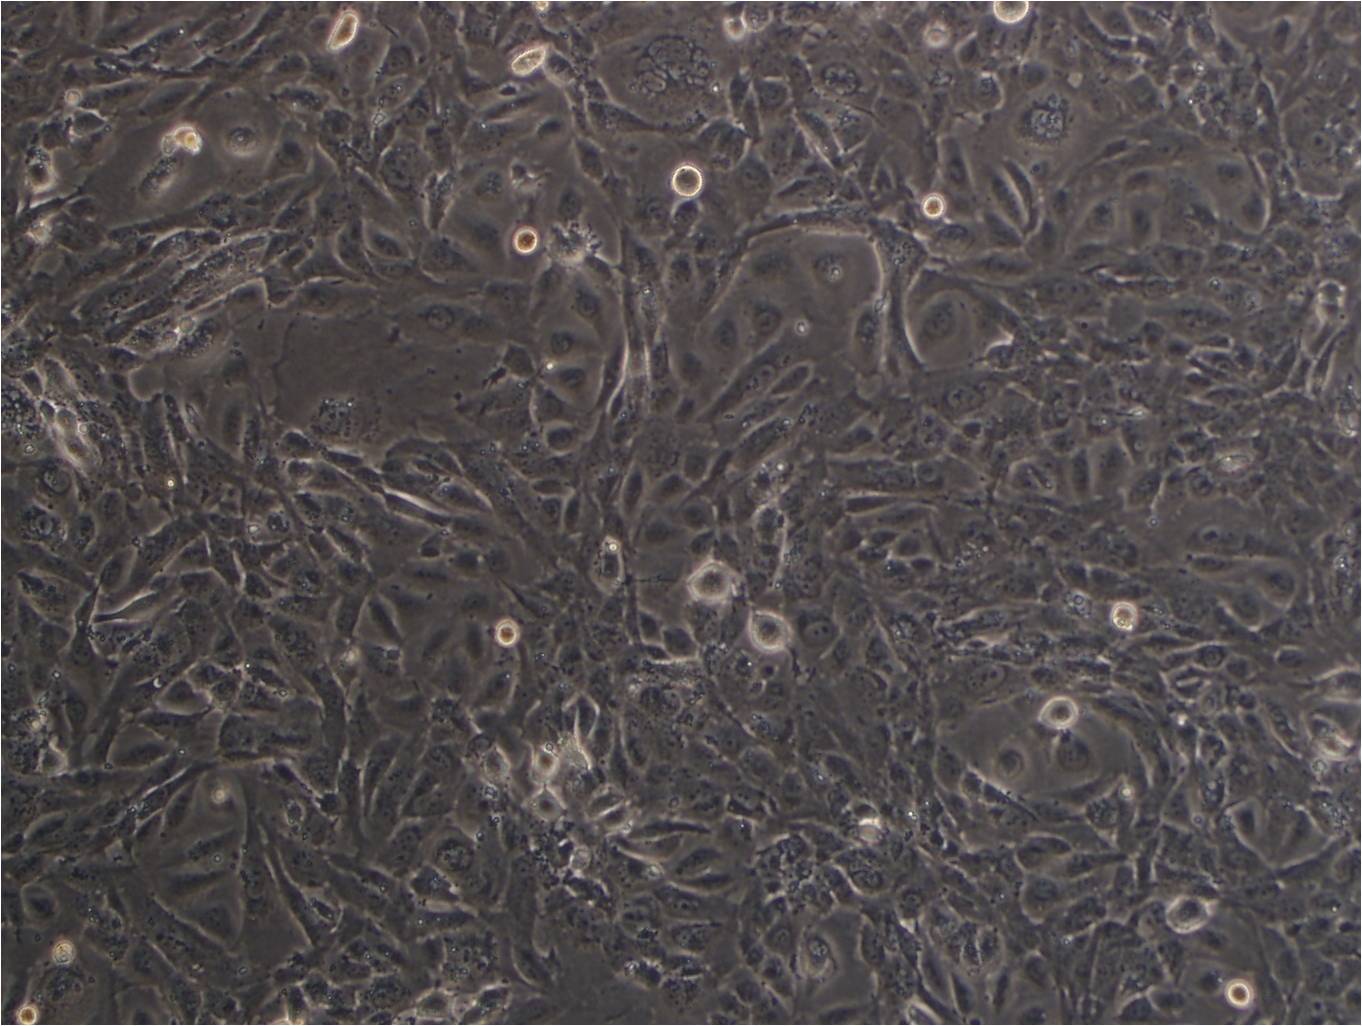 SNU-668 cell line人胃癌细胞系